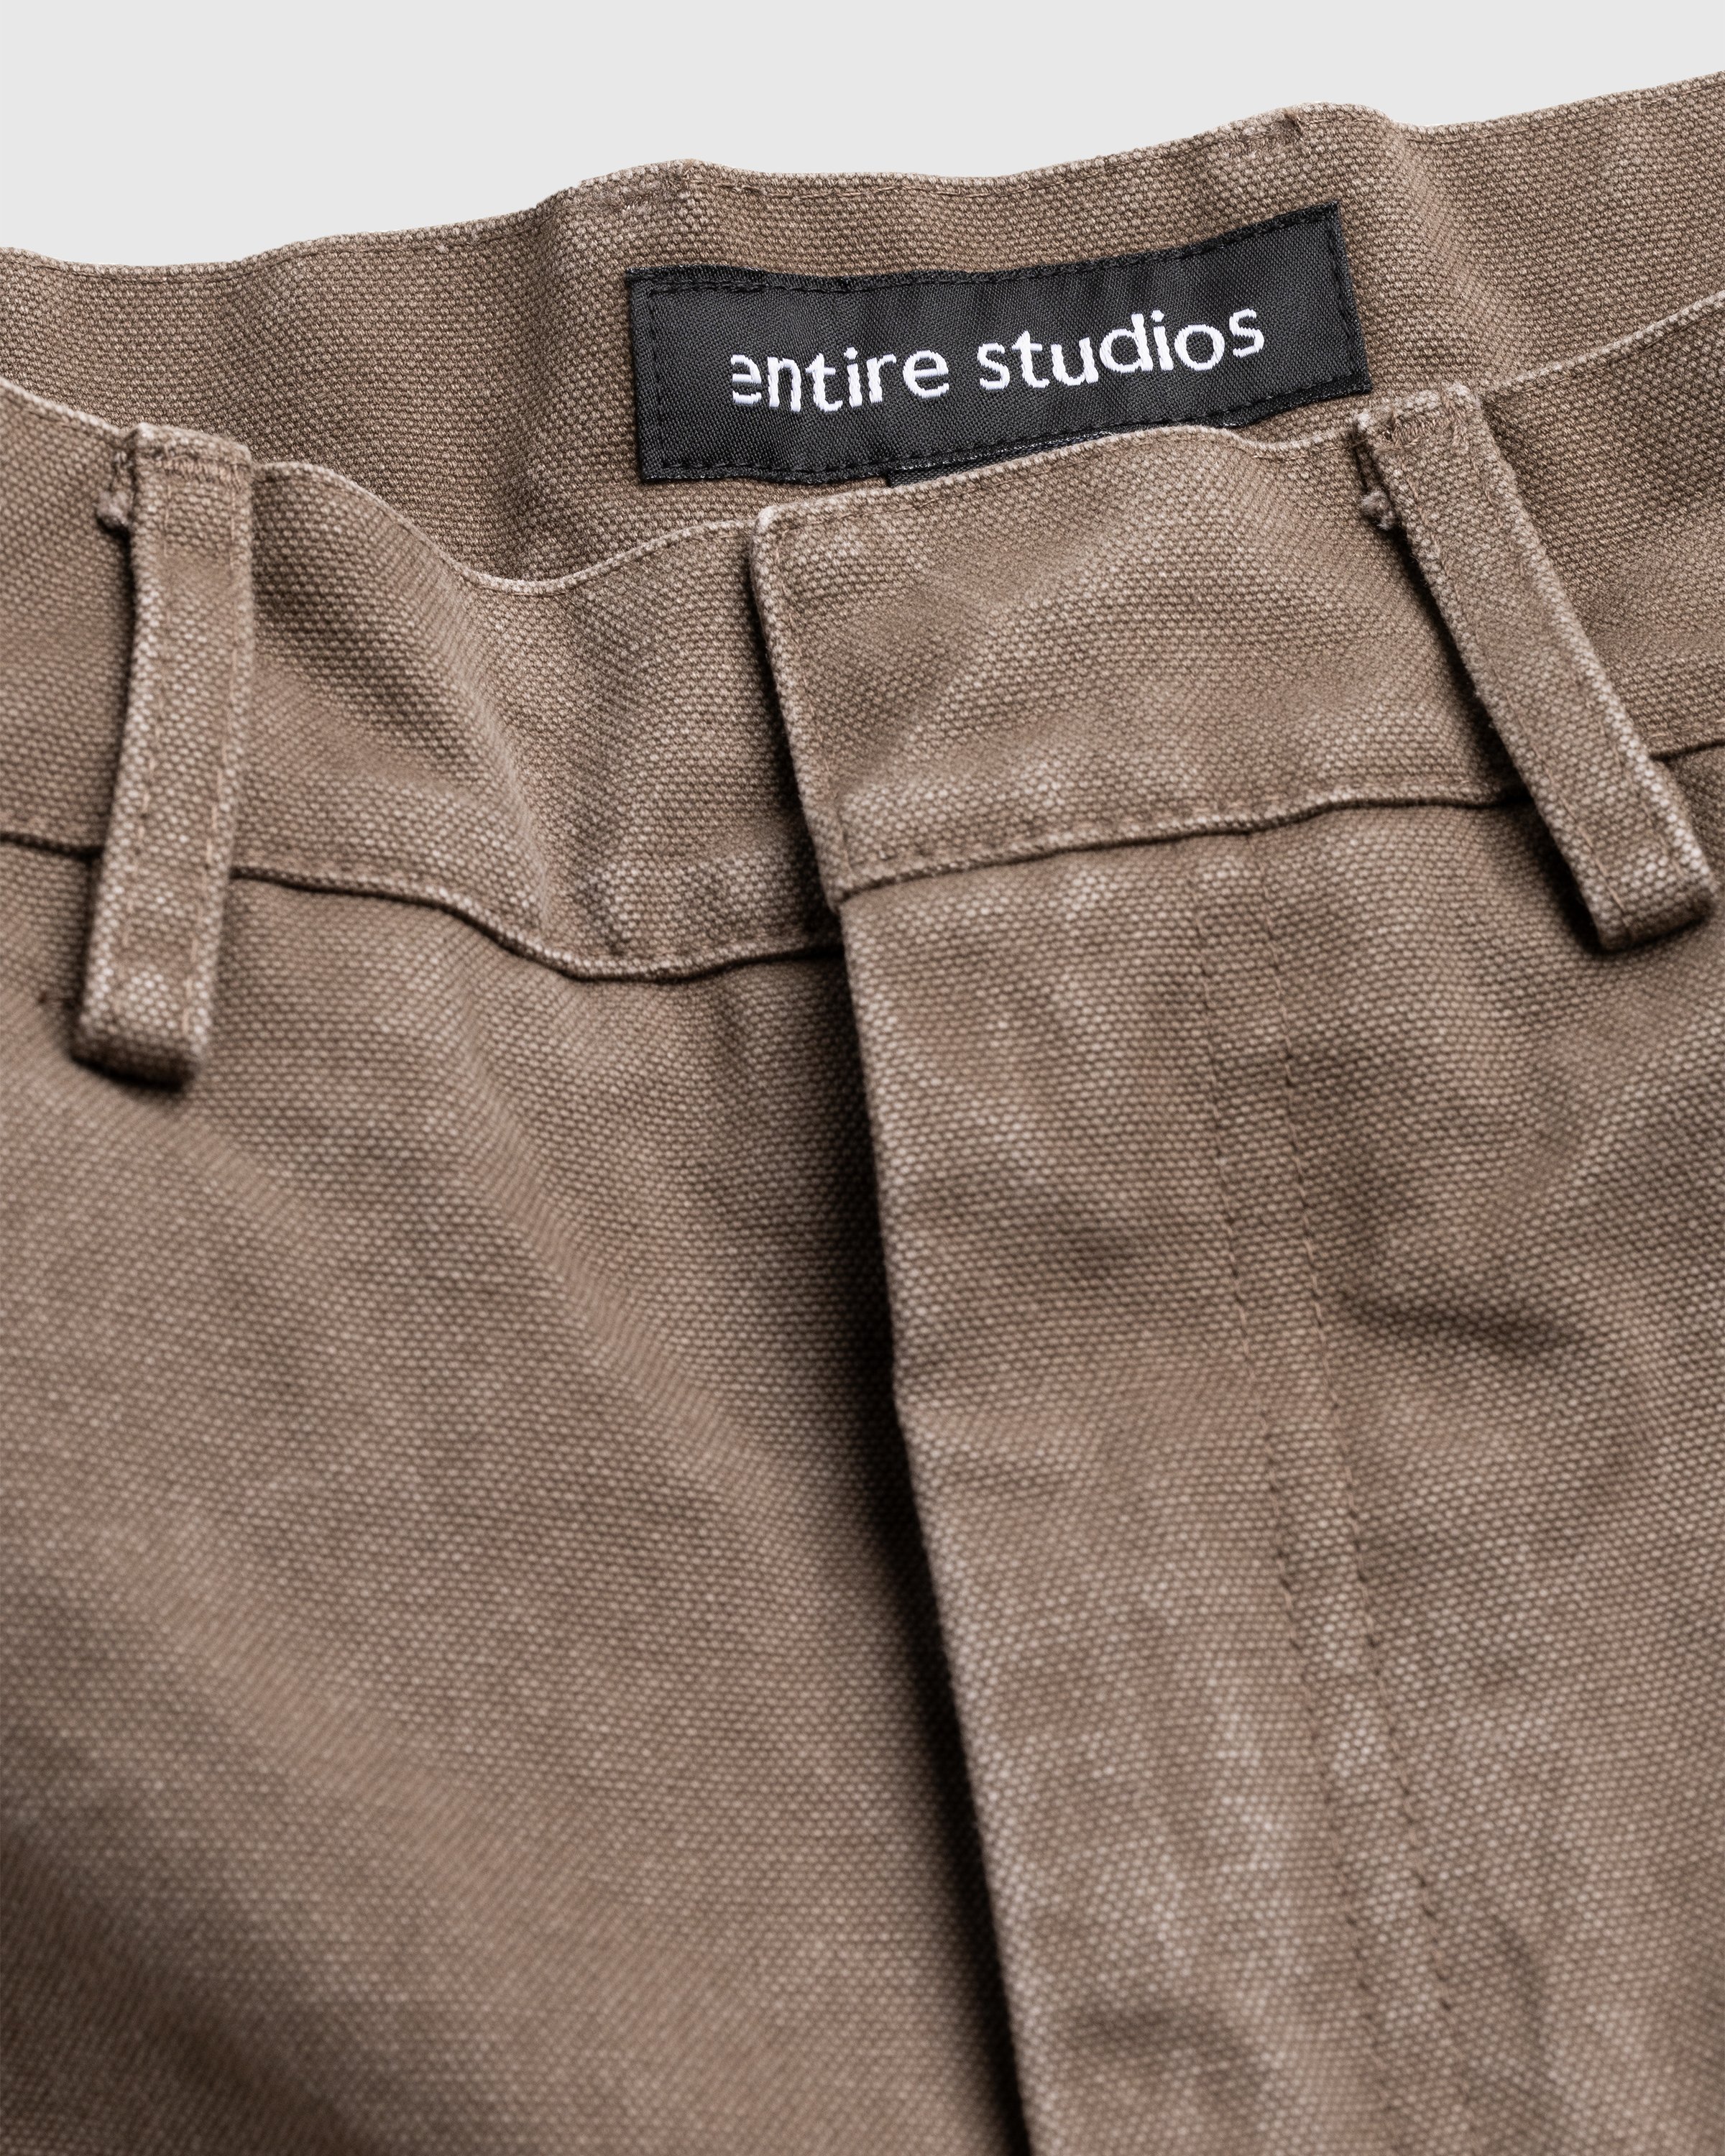 Entire Studios - Task Pant Military Mud - Clothing - Brown - Image 5